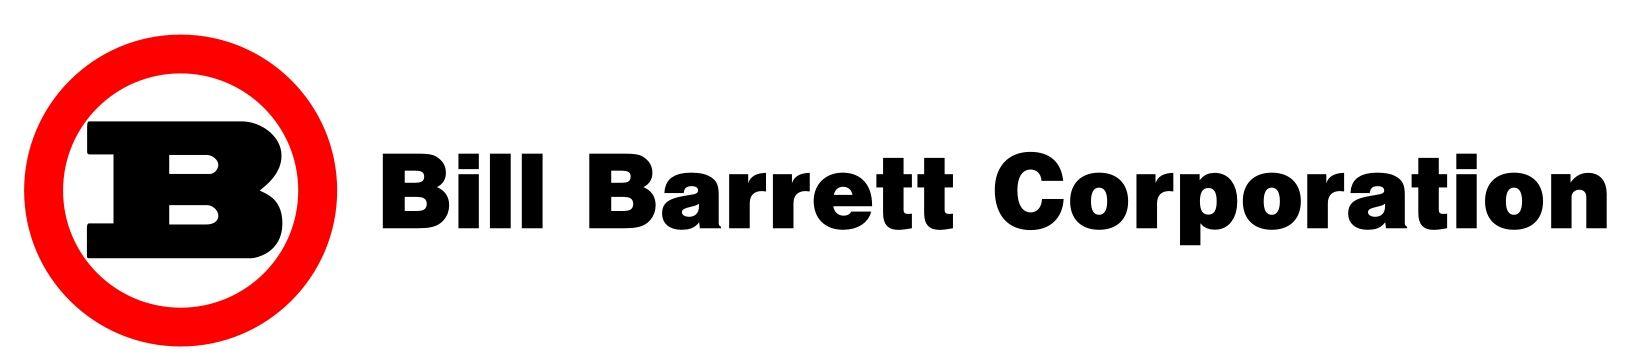 Barrett Logo - cendec - Bill Barrett chooses CORE